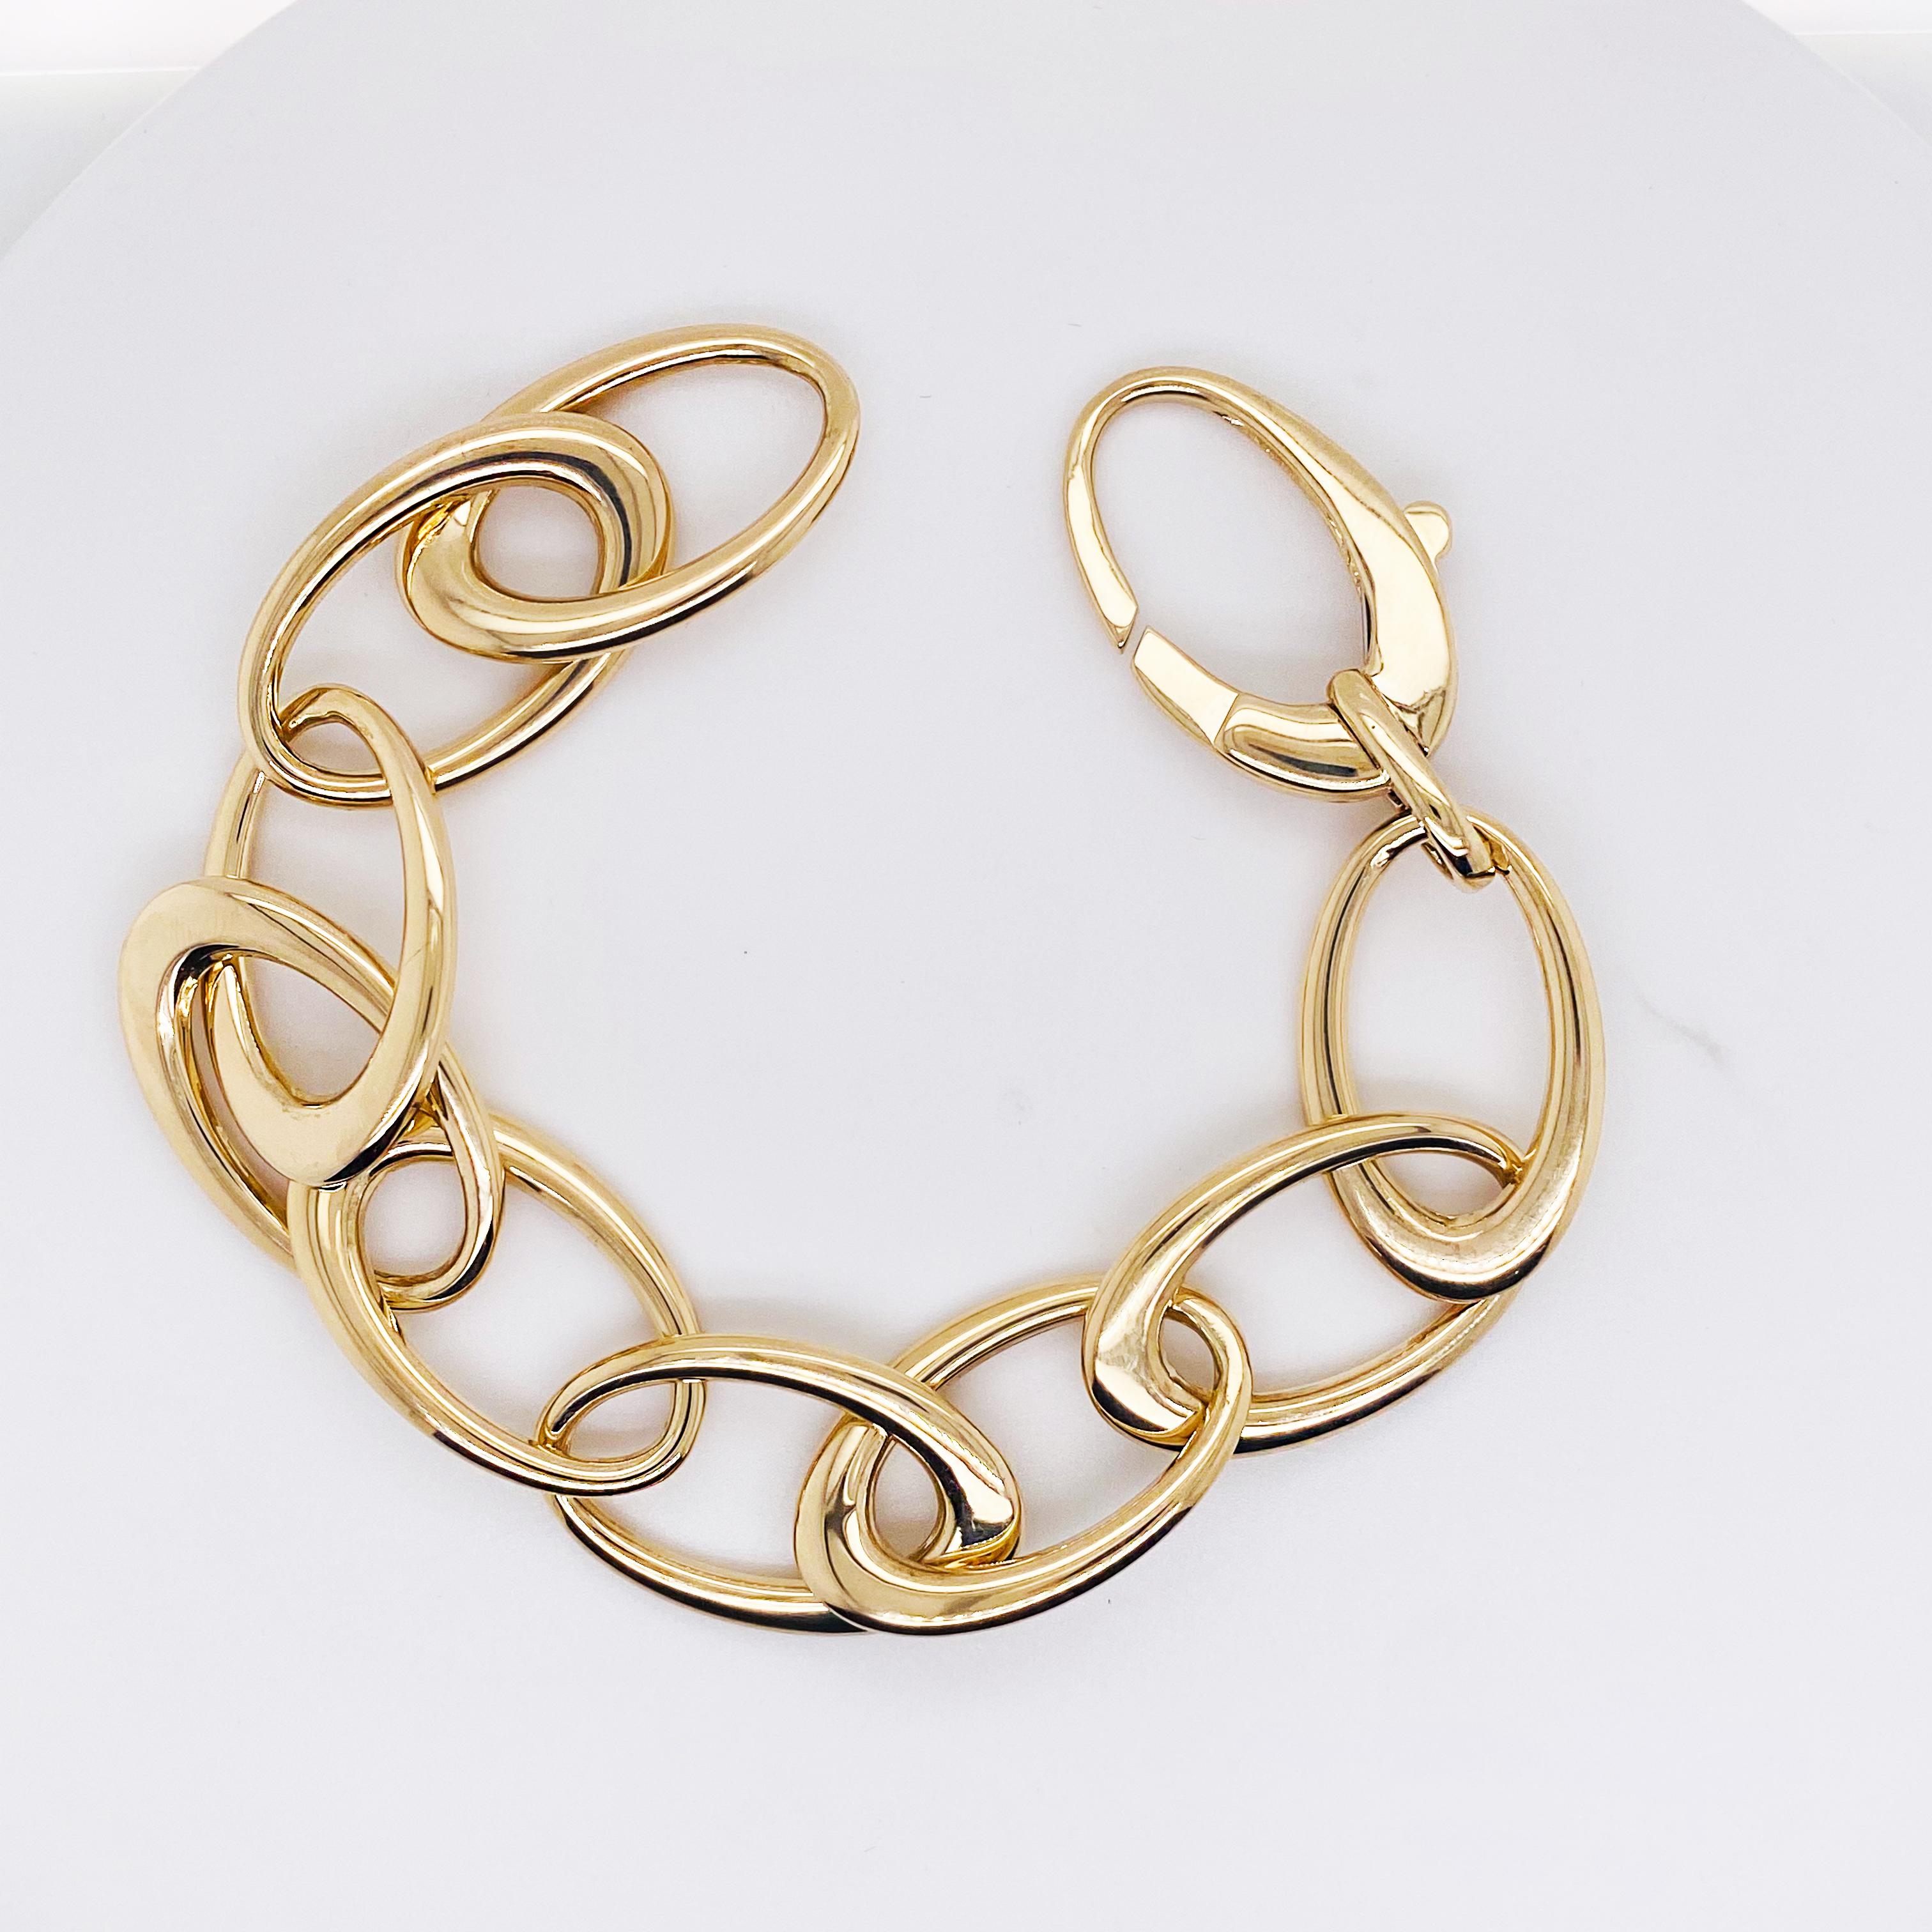 14k gold oval link bracelet